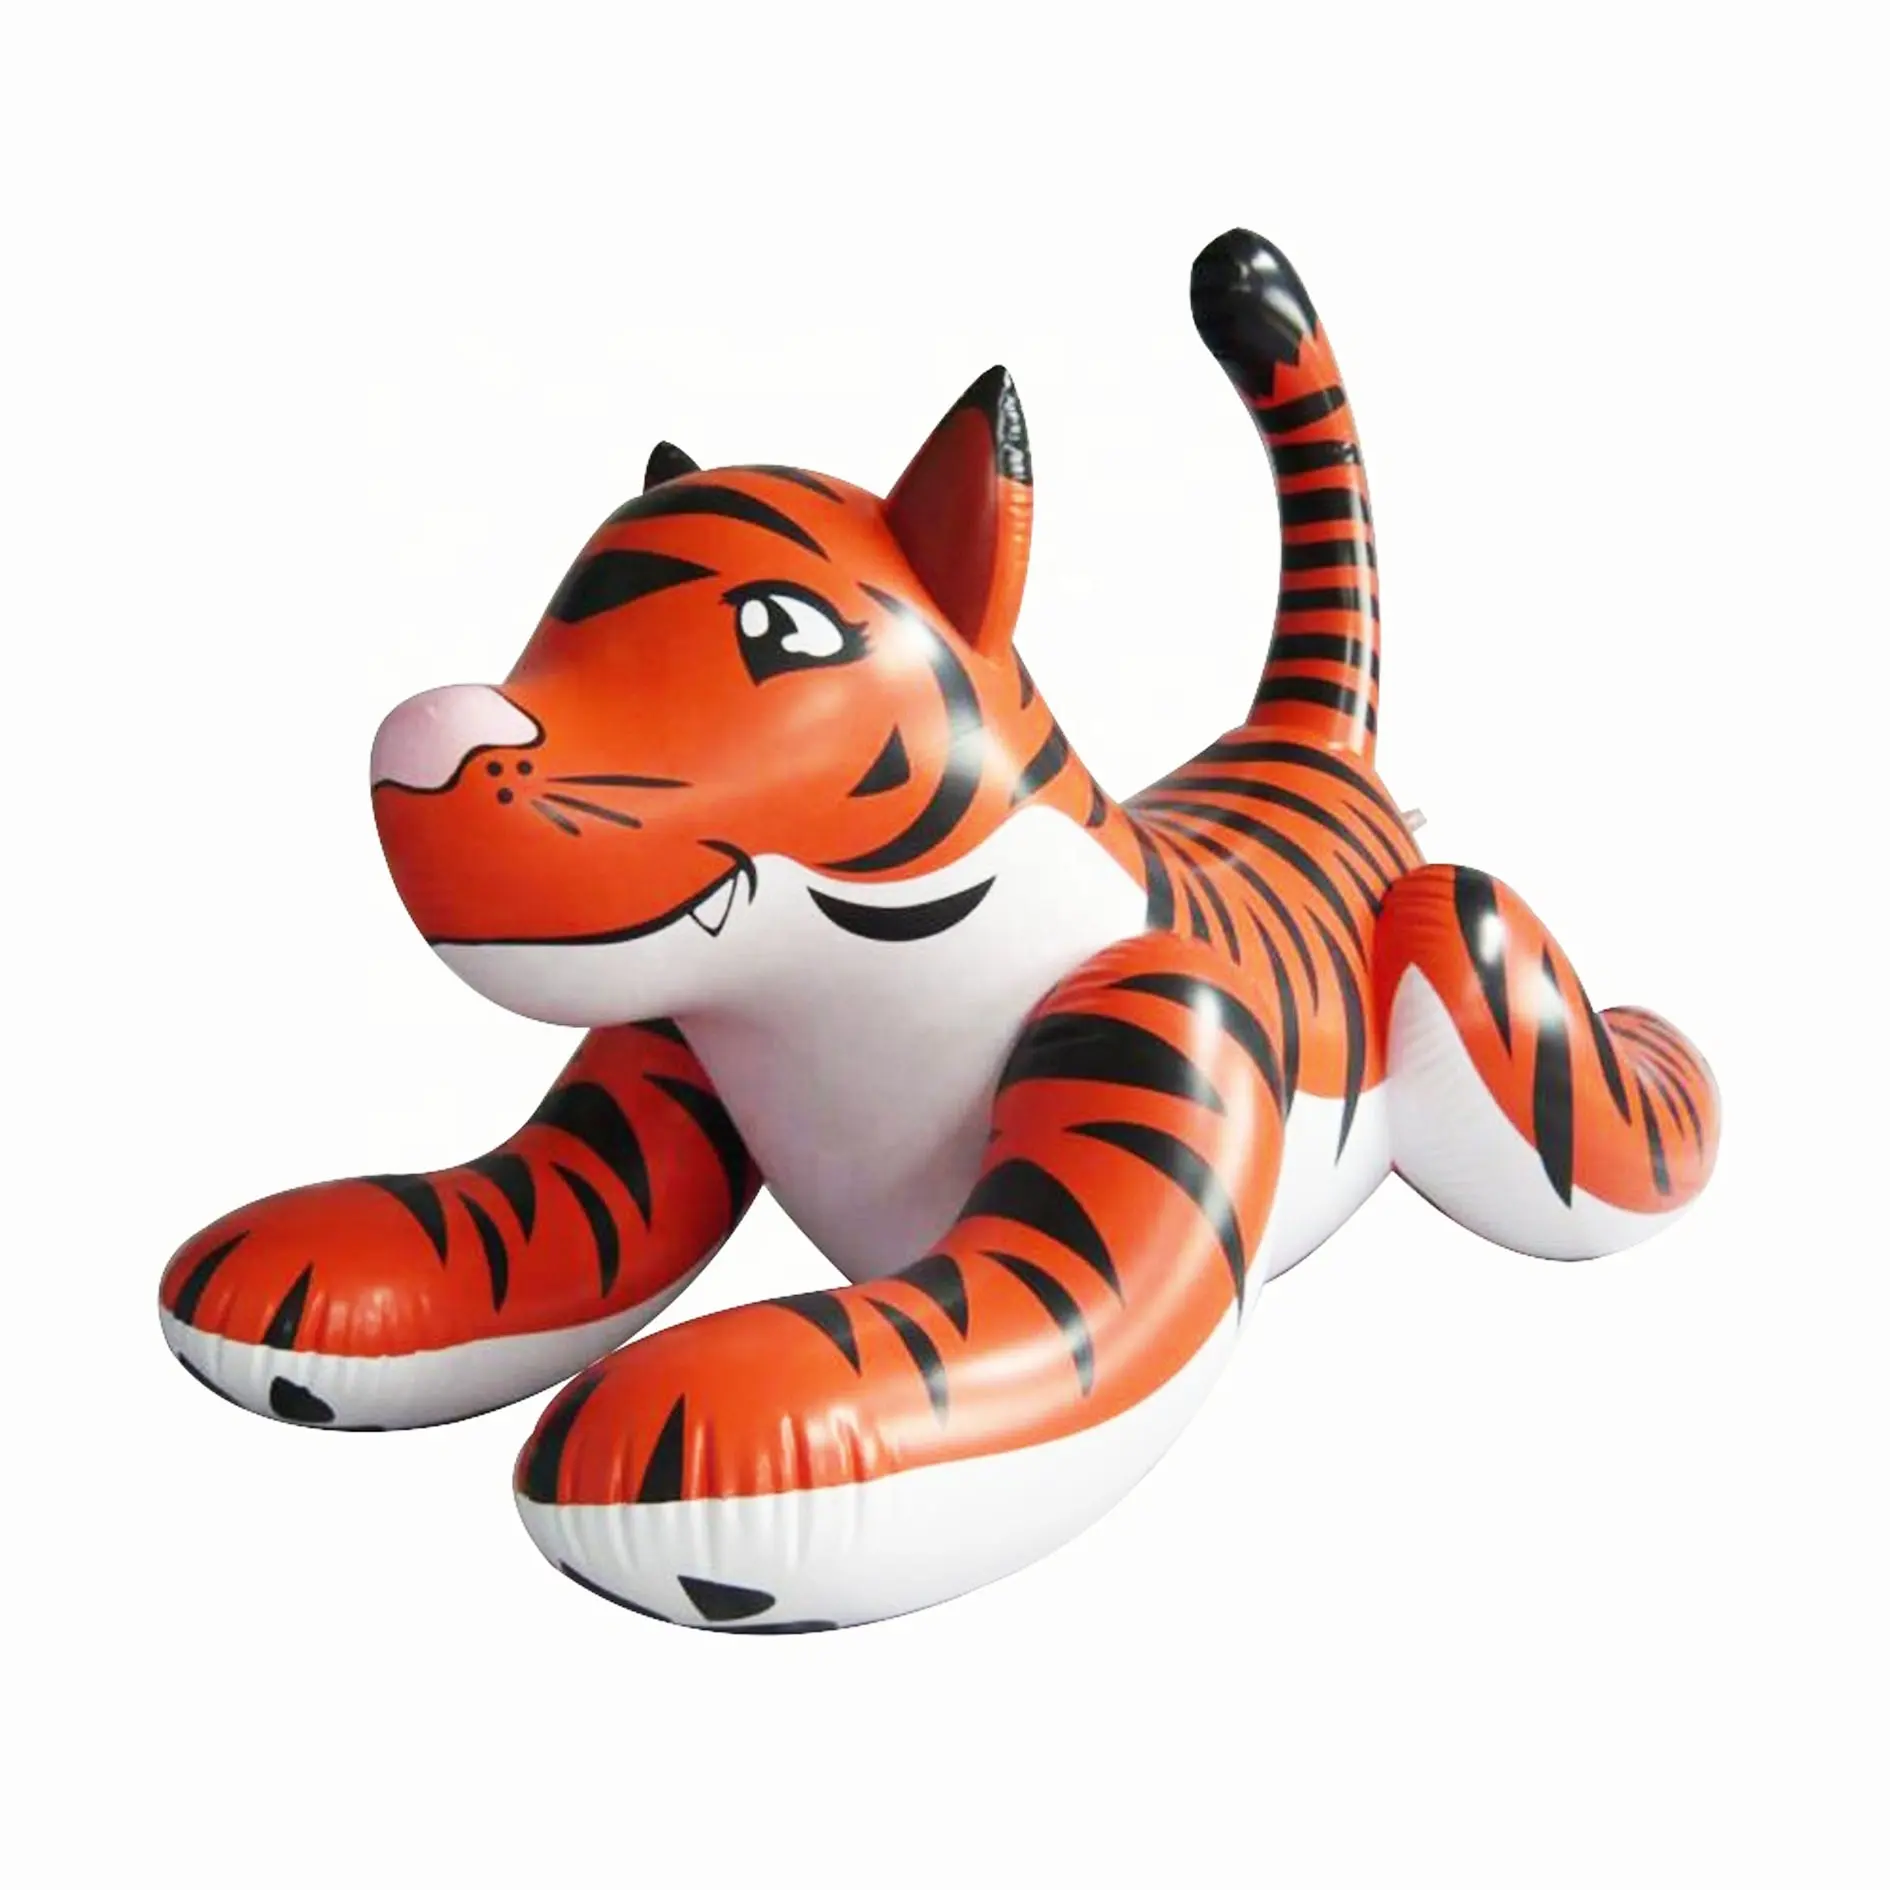 Aufblasbare tiger outdoor werbung kampagne displays aufblasbare PVC cartoon tier tiger